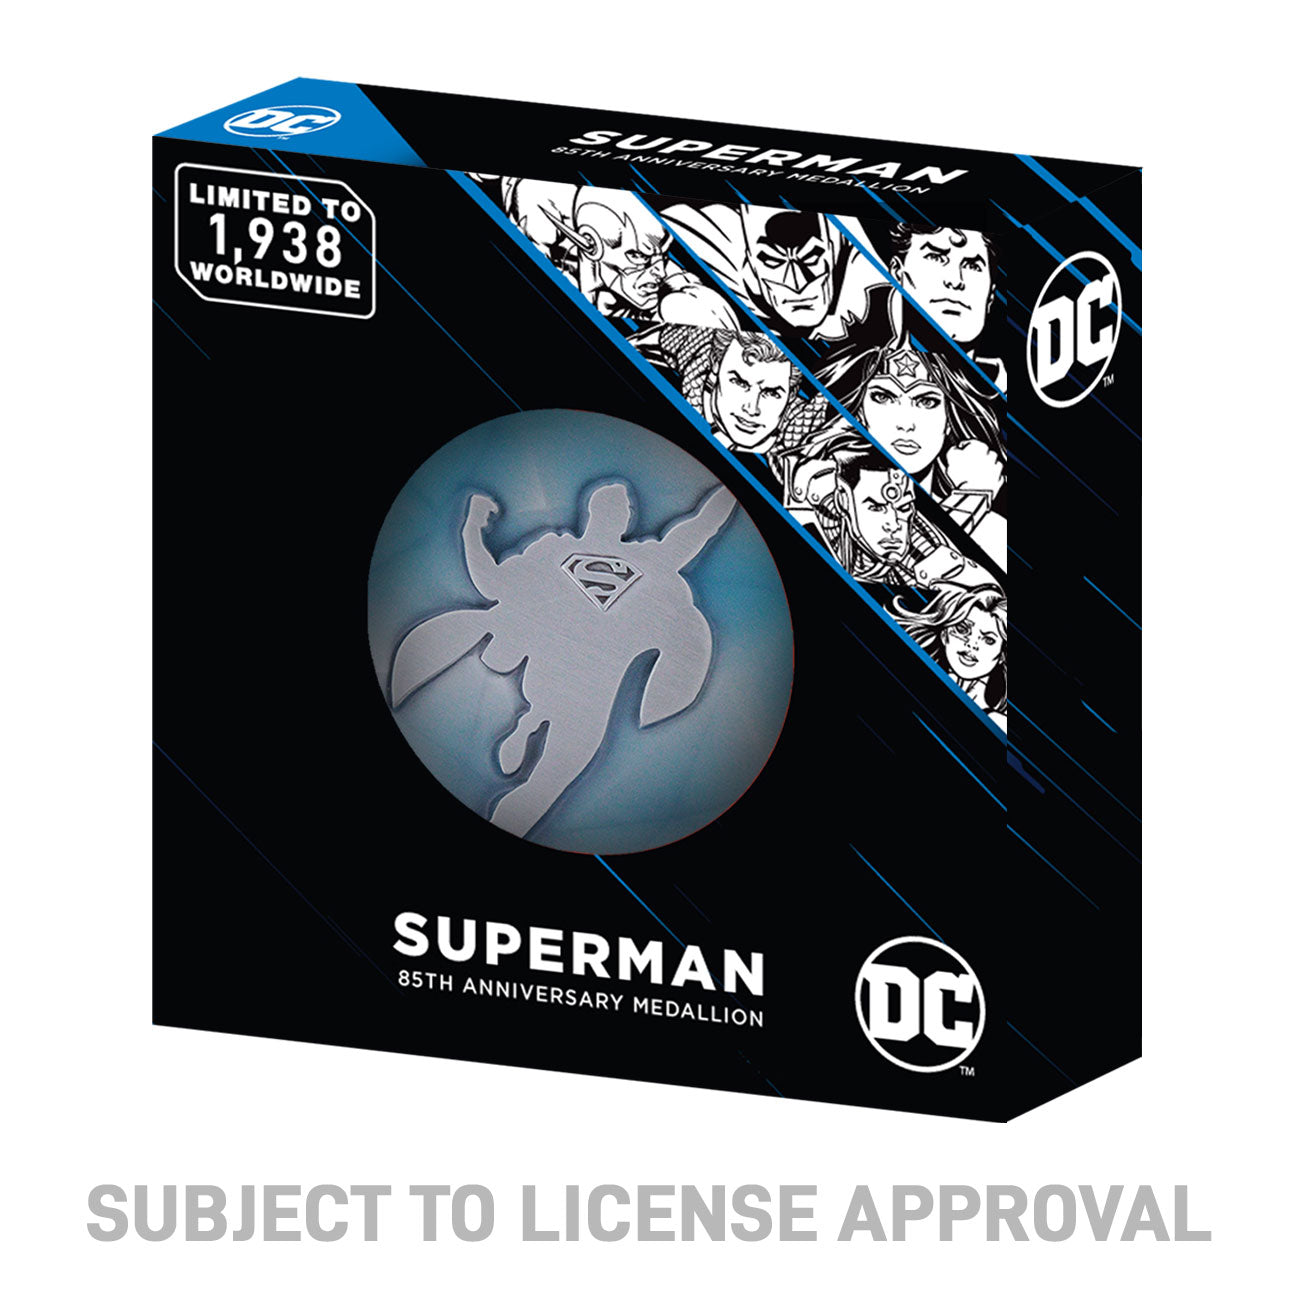 Superman Limited Edition Medallion